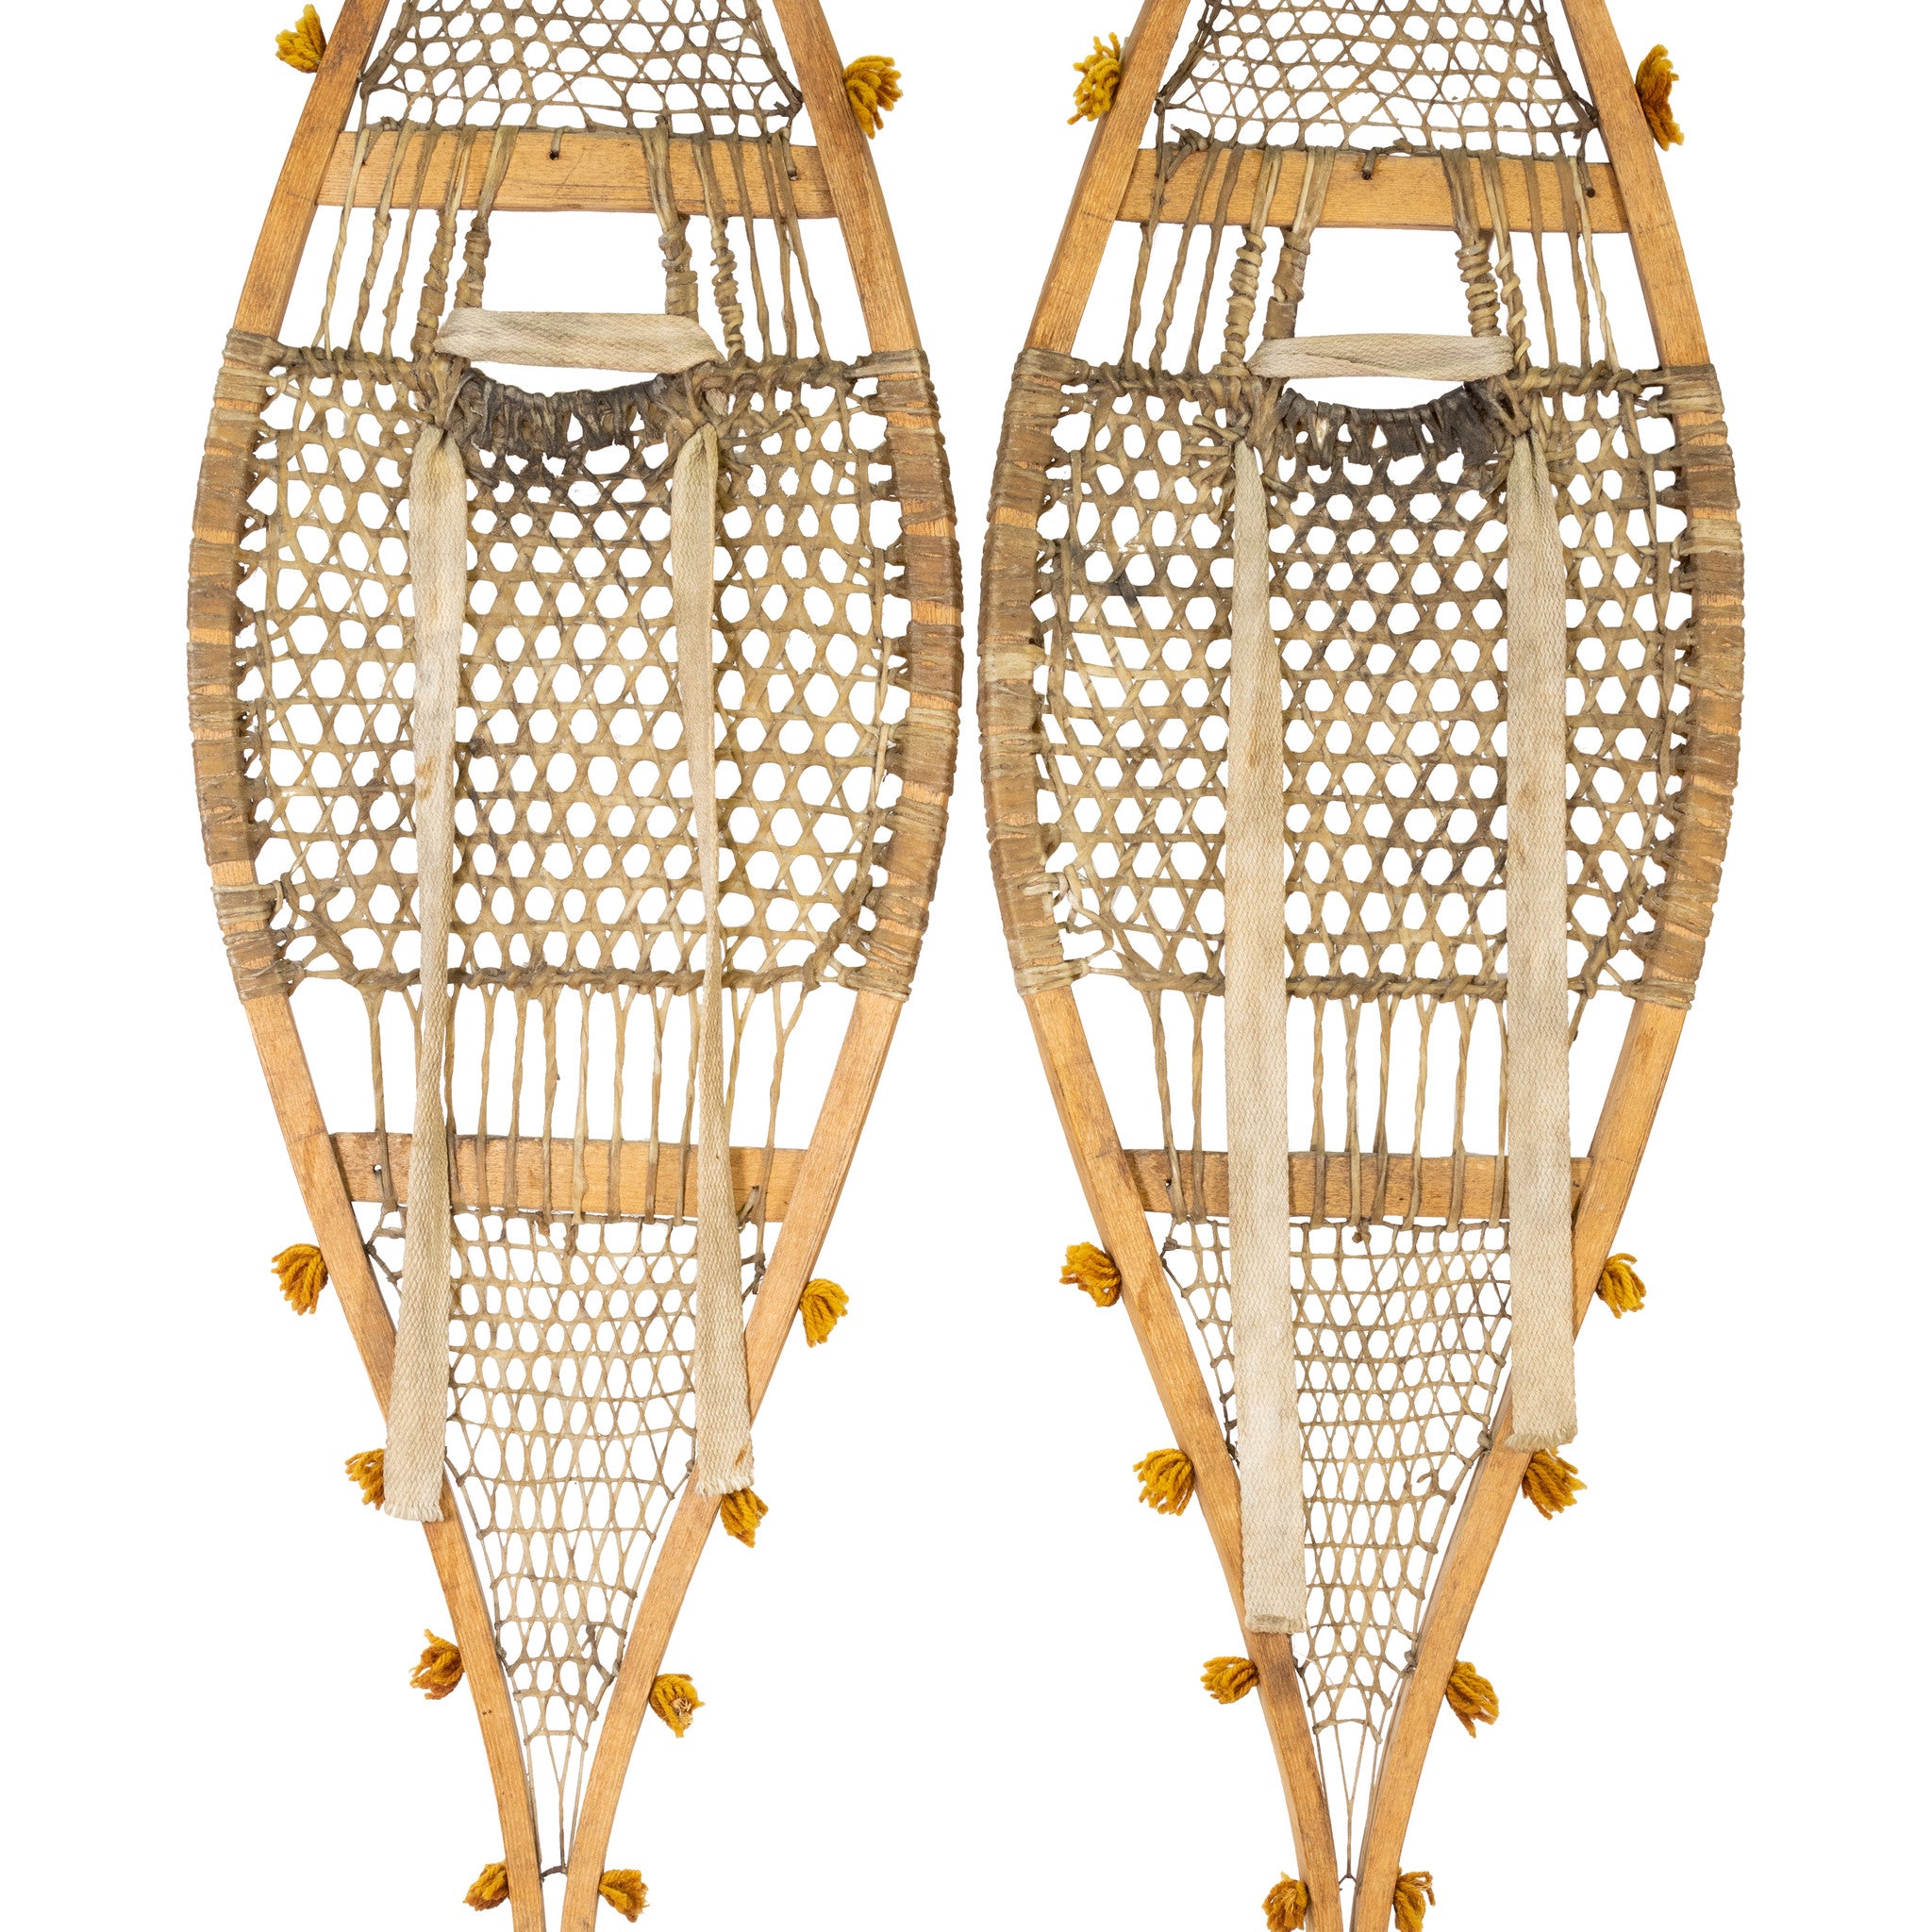 Ojibwe snowshoes